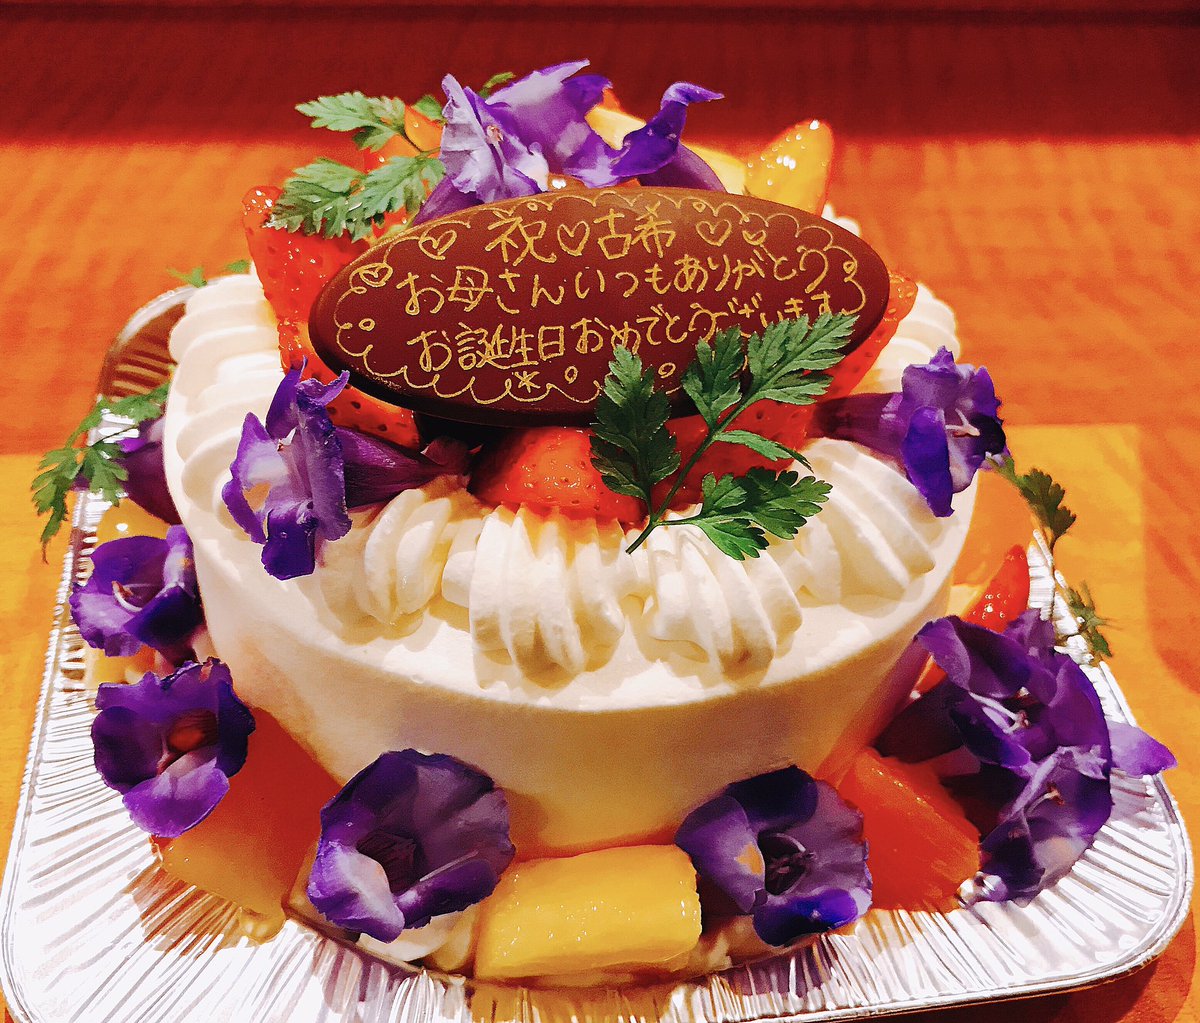 Ljestve Teme 古希のお祝いケーキ Na Twitteru